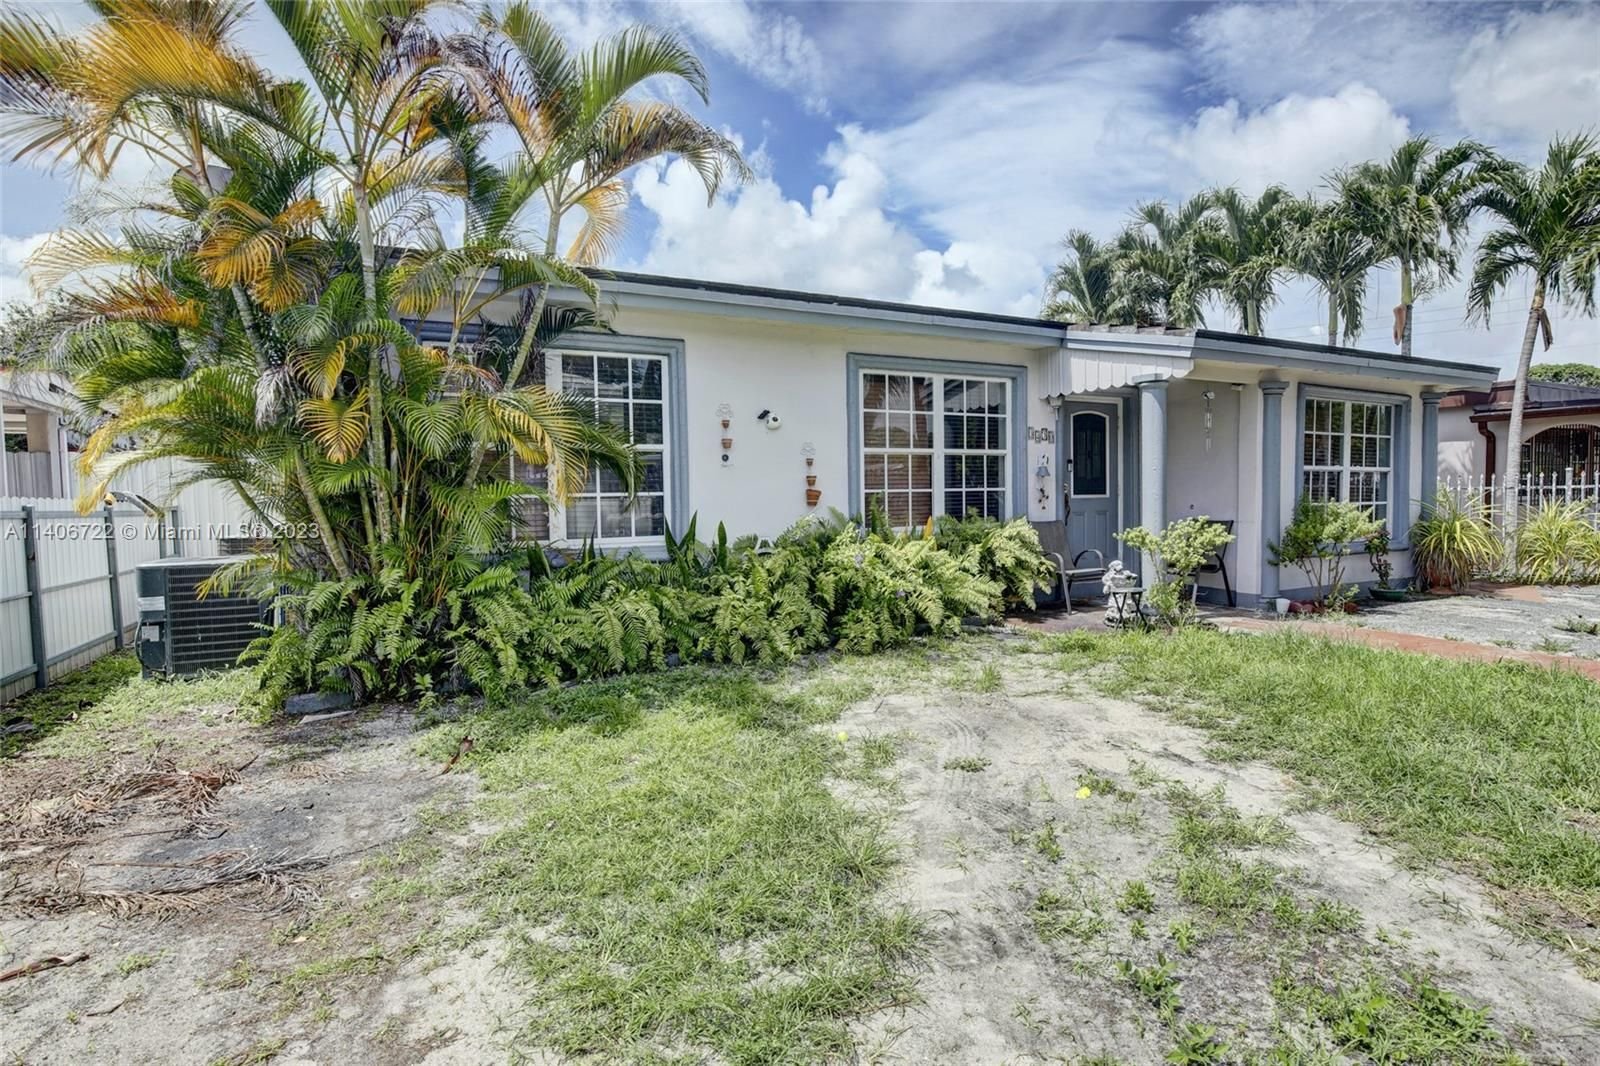 Real estate property located at 3430 101st St, Miami-Dade County, THE TROPICS ADDN, Miami, FL